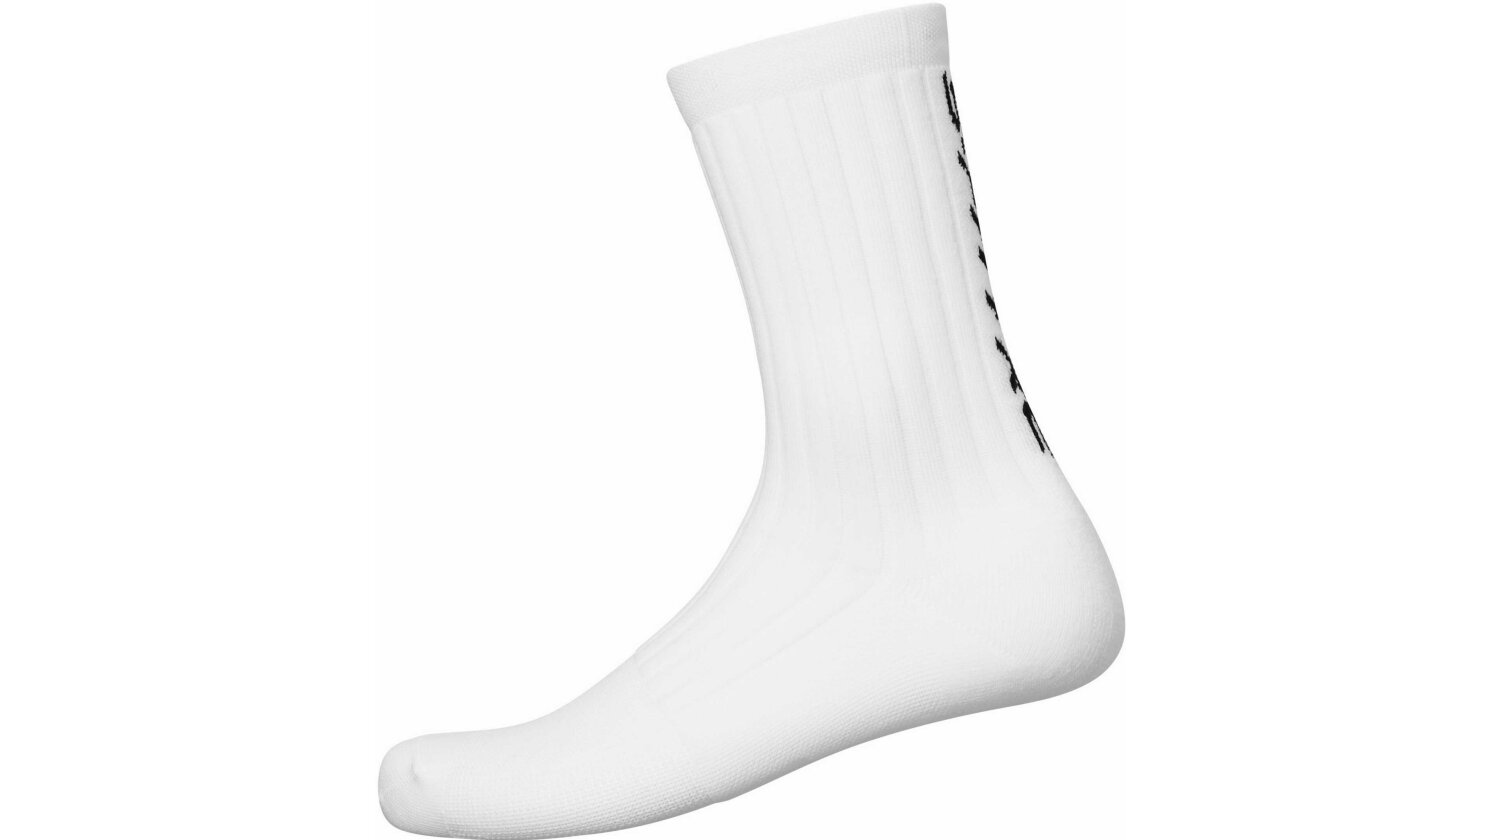 Shimano S-Phyre Flash Socke white